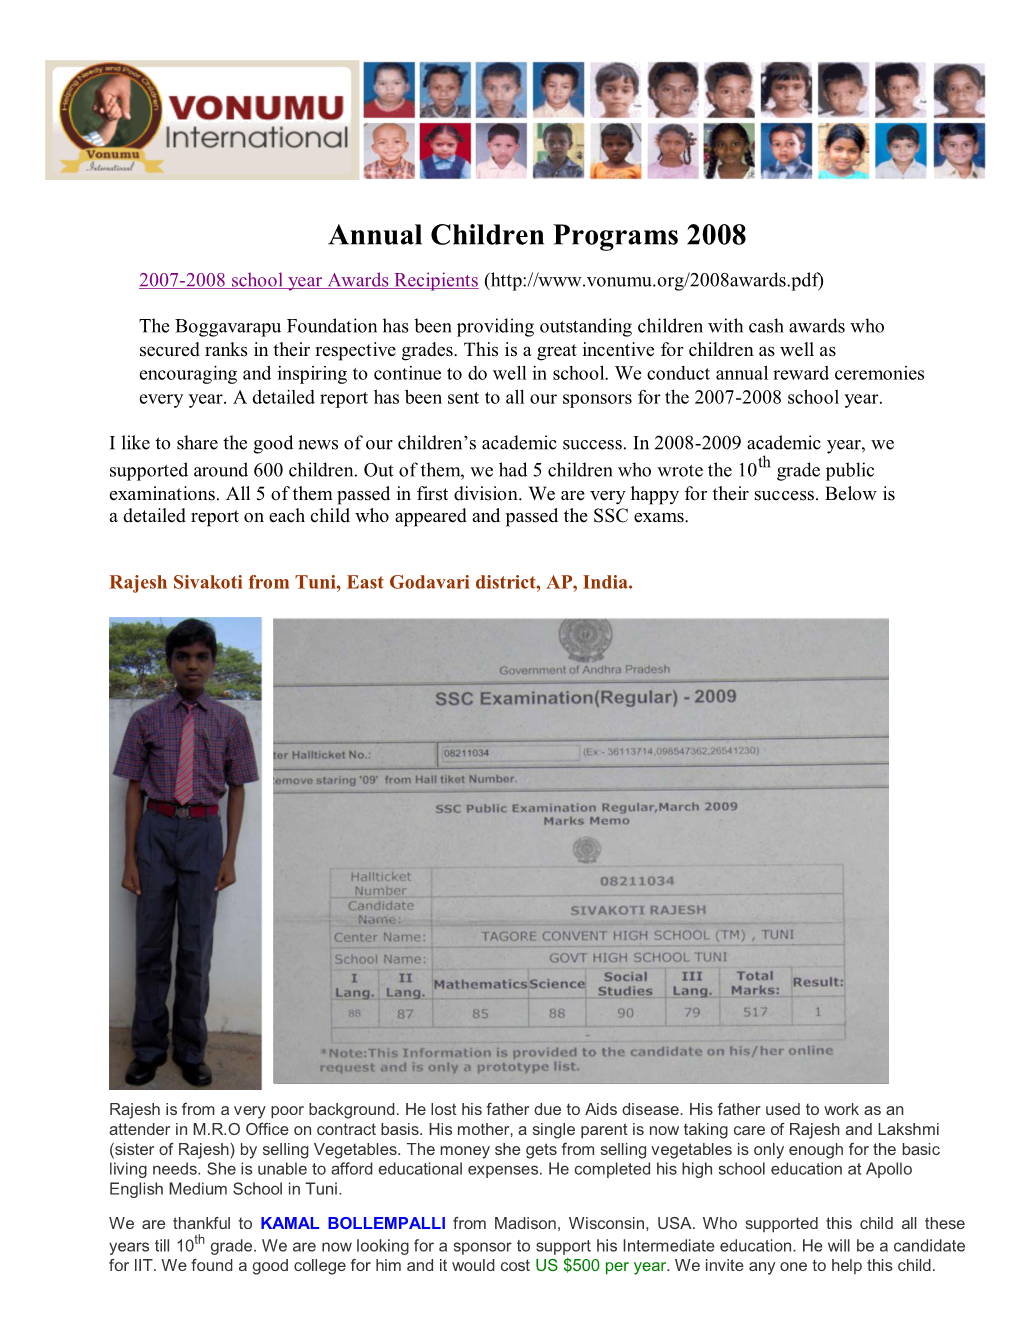 2008 Annual Children Programs